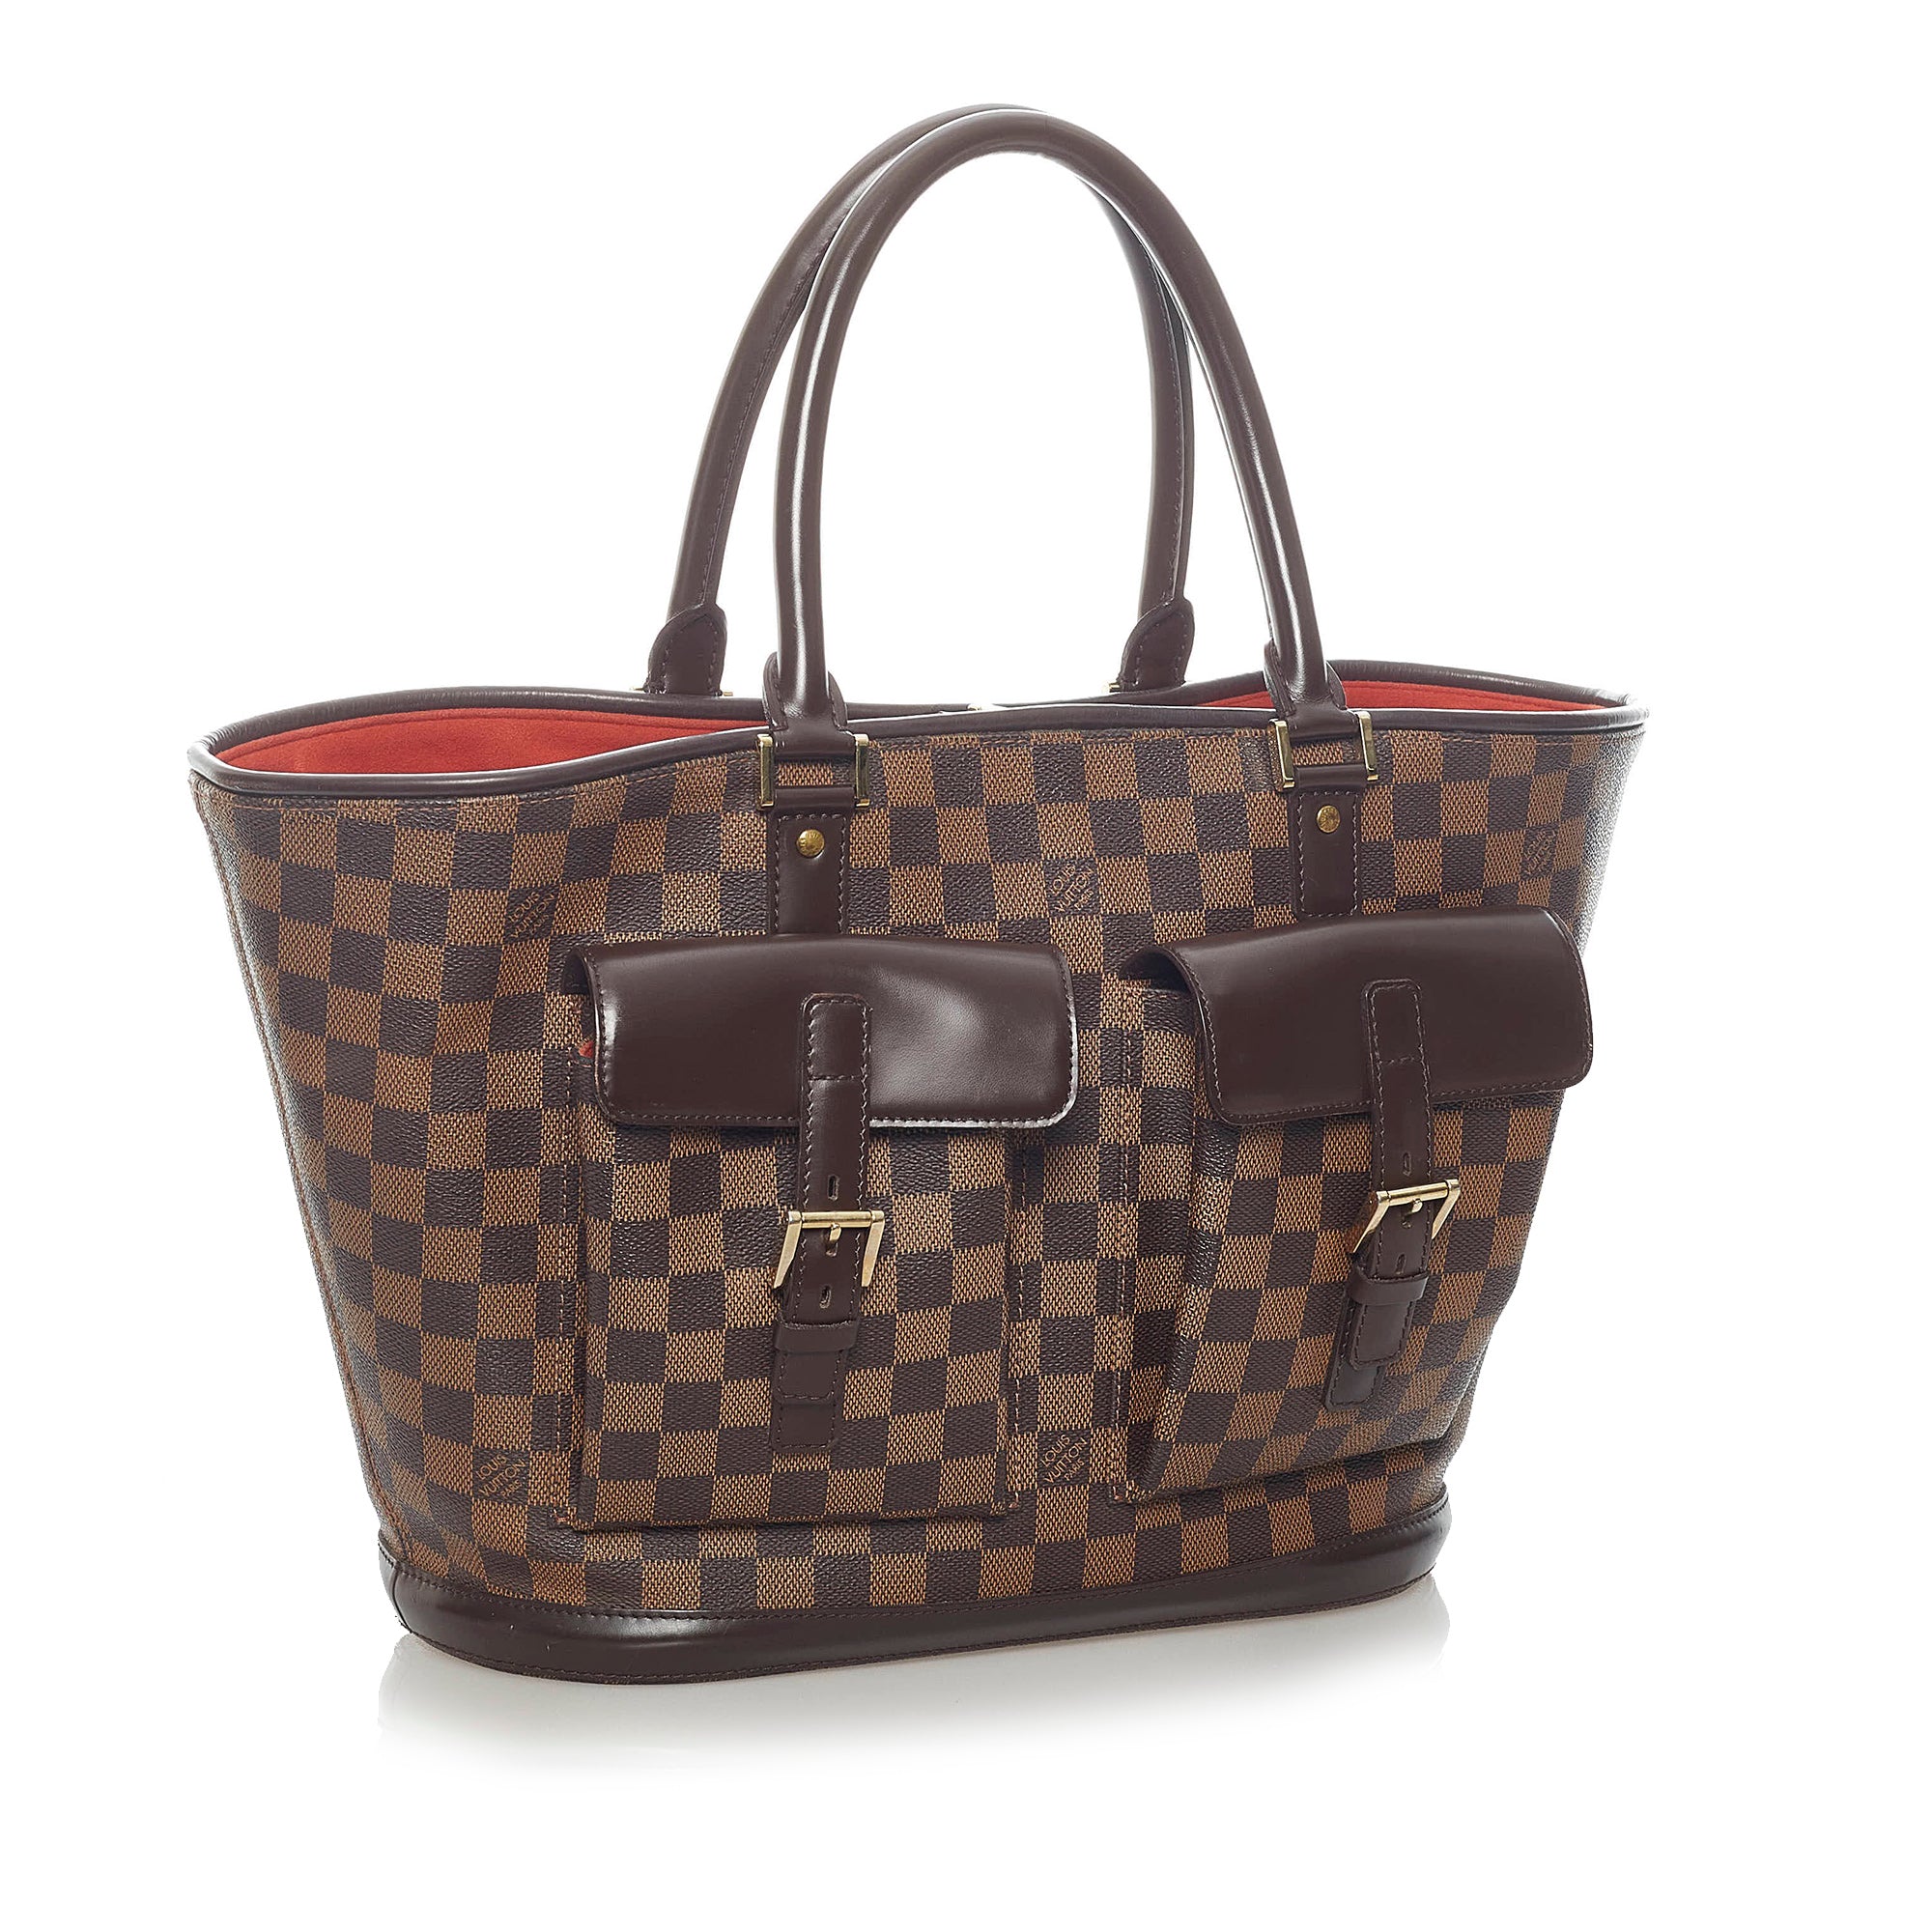 PRELOVED Louis Vuitton Manosque GM Damier Ebene Canvas Handbag FL1004 040623